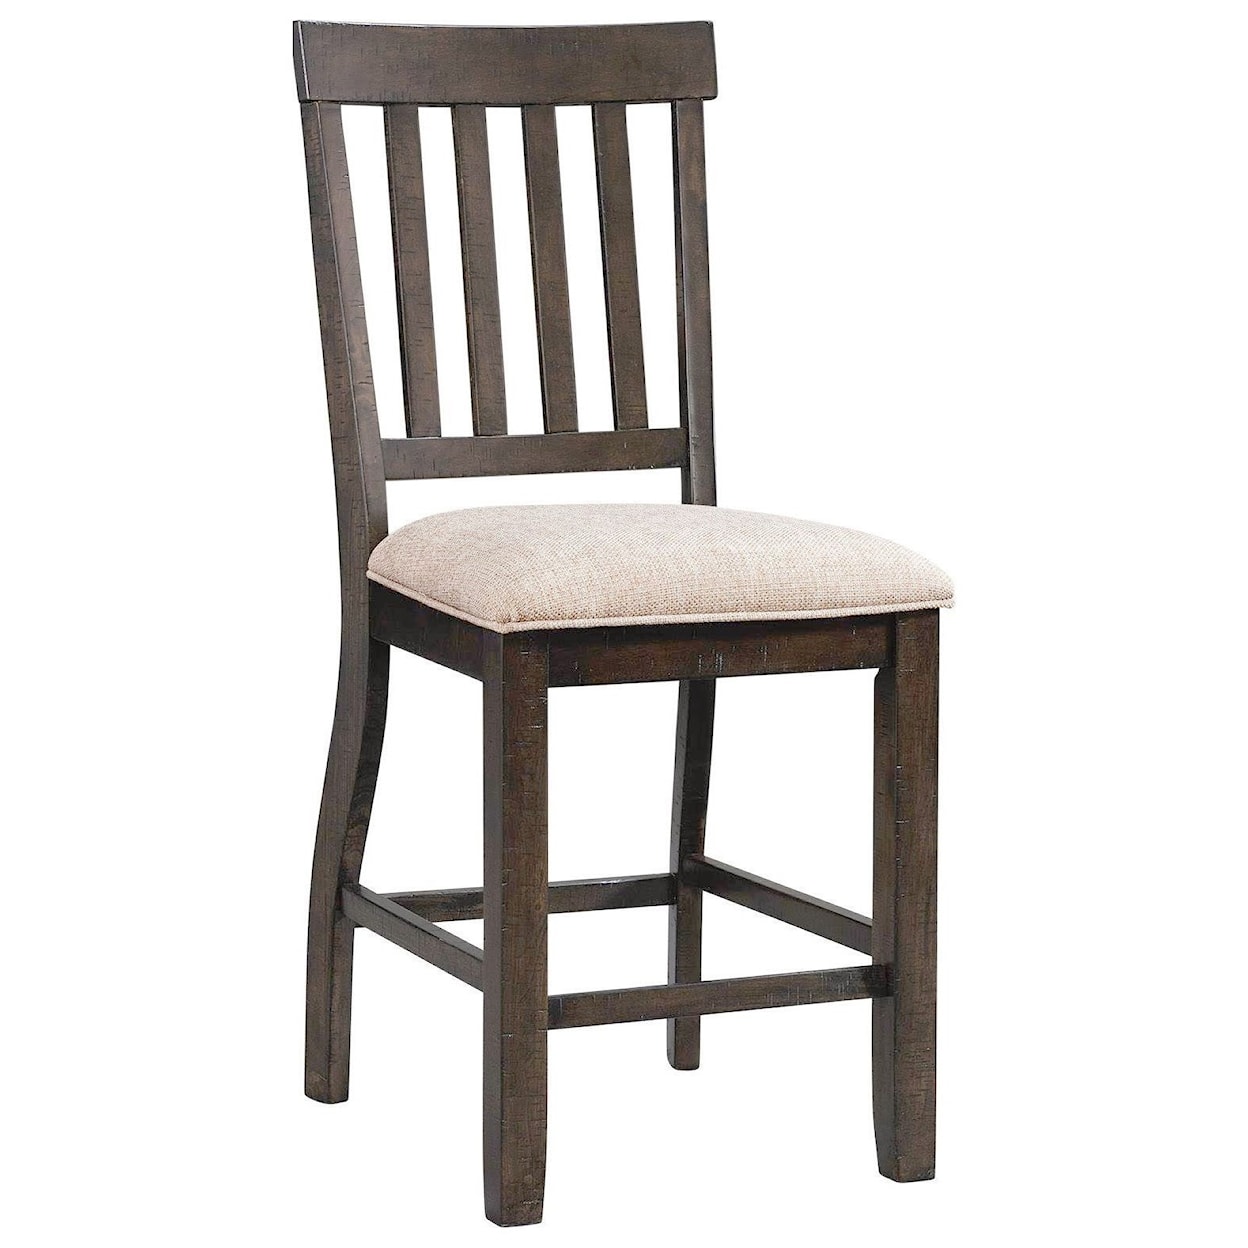 Elements International Stone Slat Back Counter Dining Chair